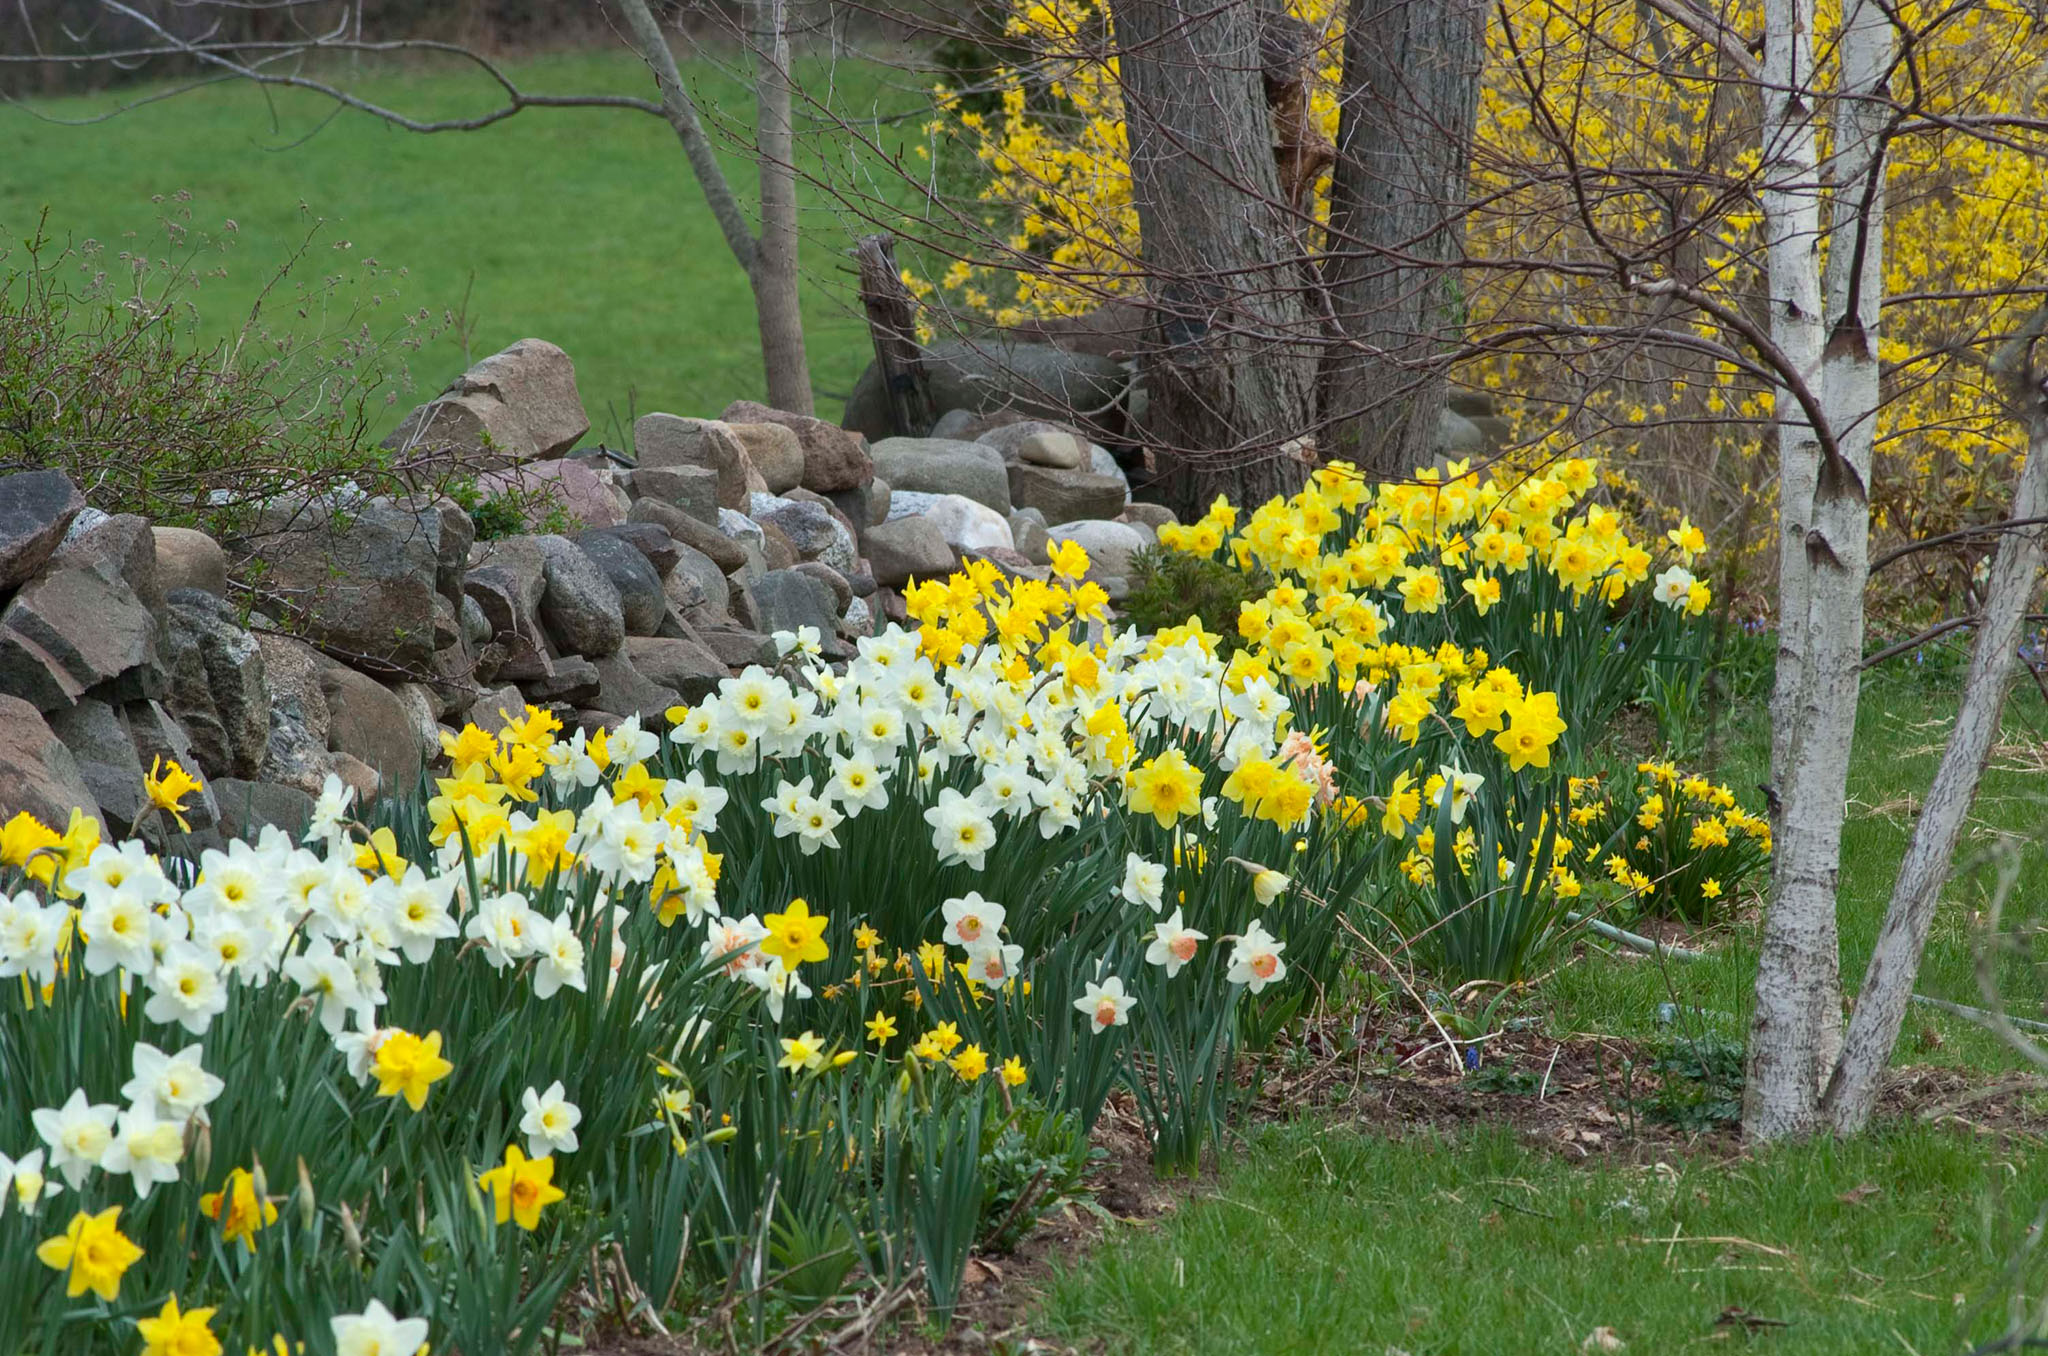 Mixed daffodils alongside wall